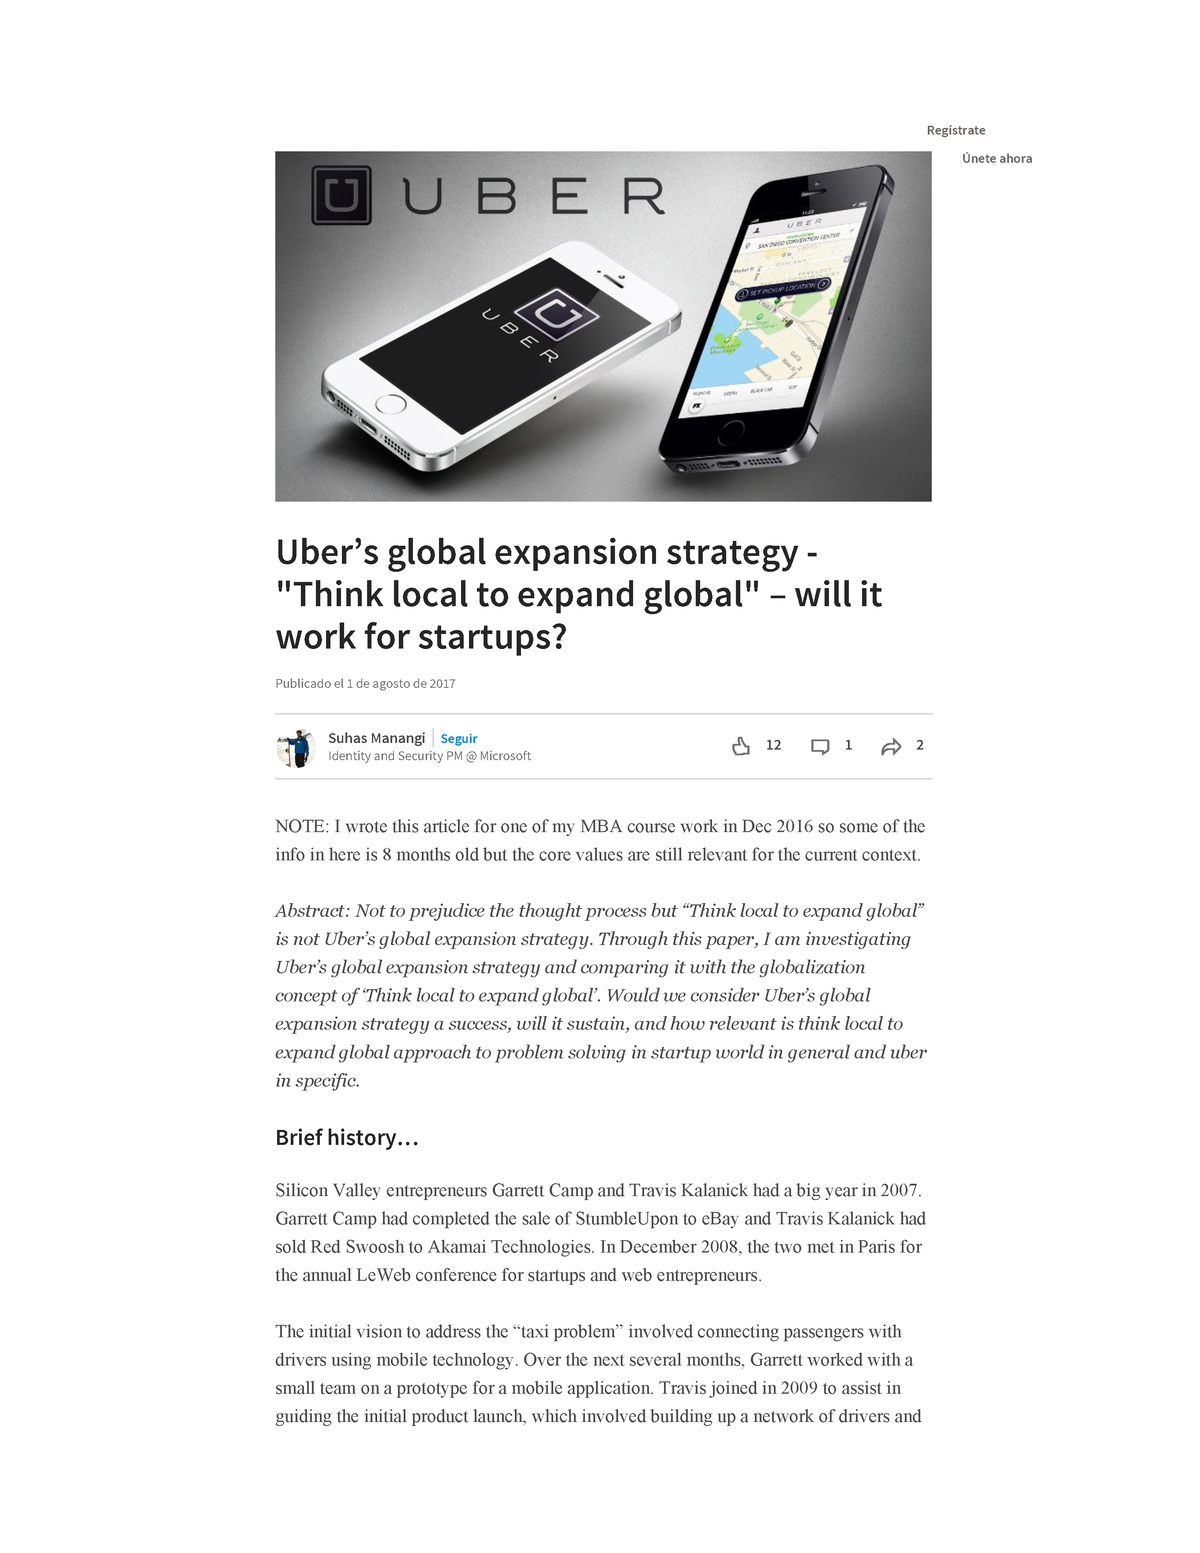 uber strategy case study